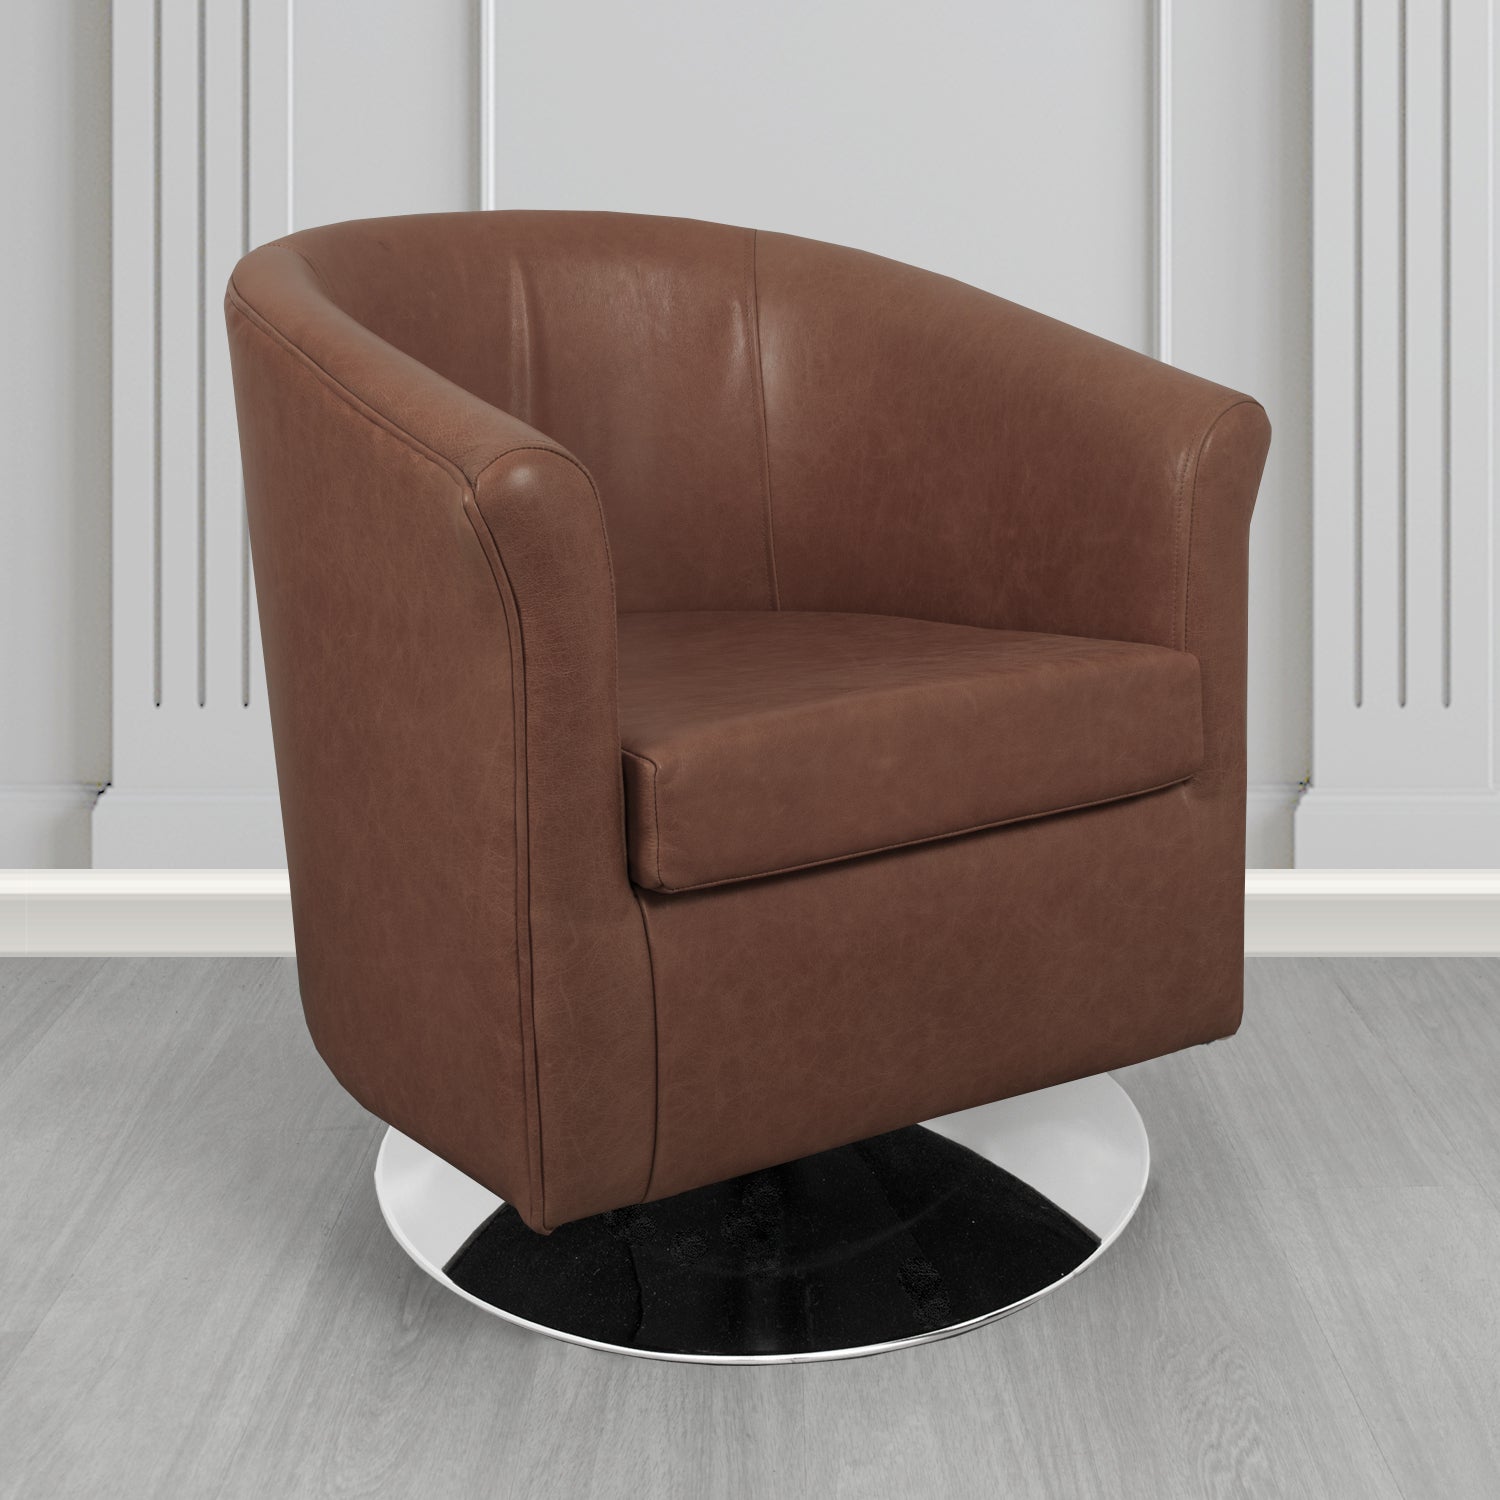 Tuscany Swivel Tub Chair in Crib 5 Old English Dark Brown Genuine Leather - The Tub Chair Shop